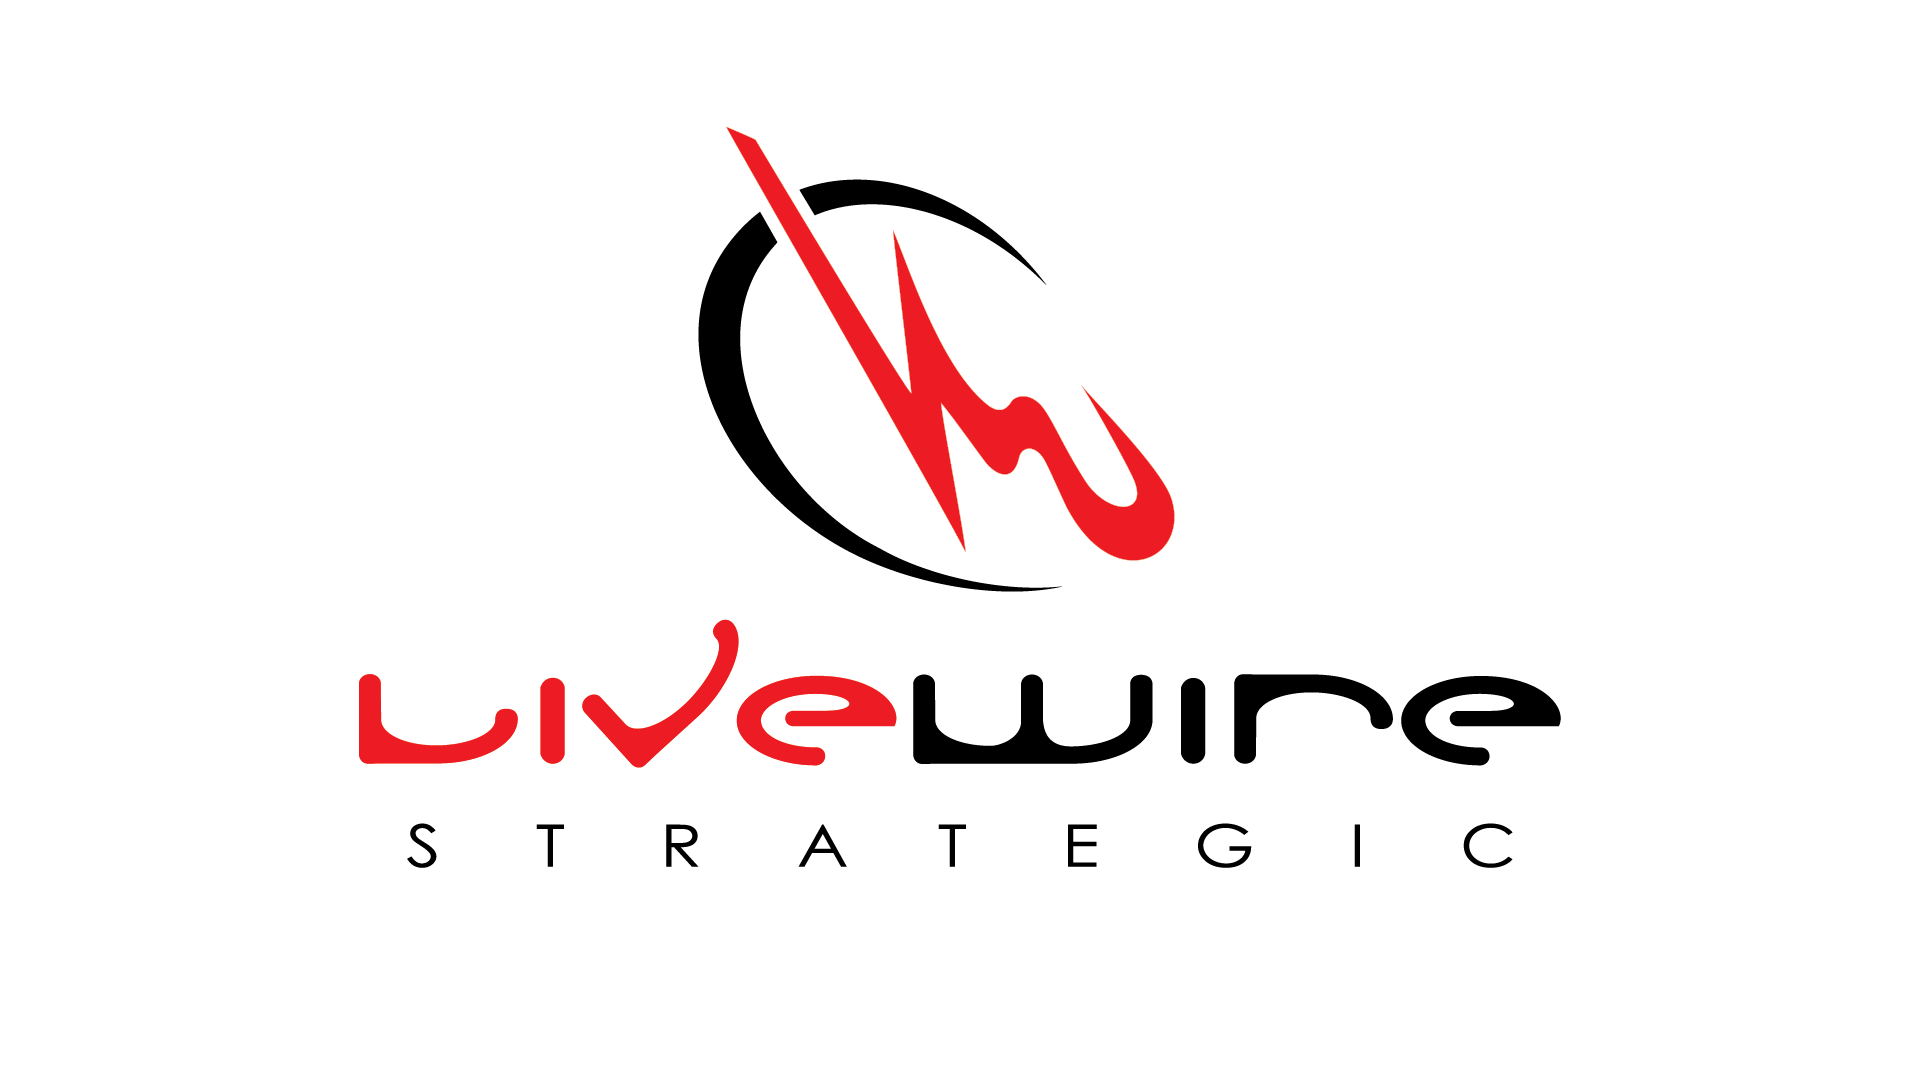 Livewire Creative